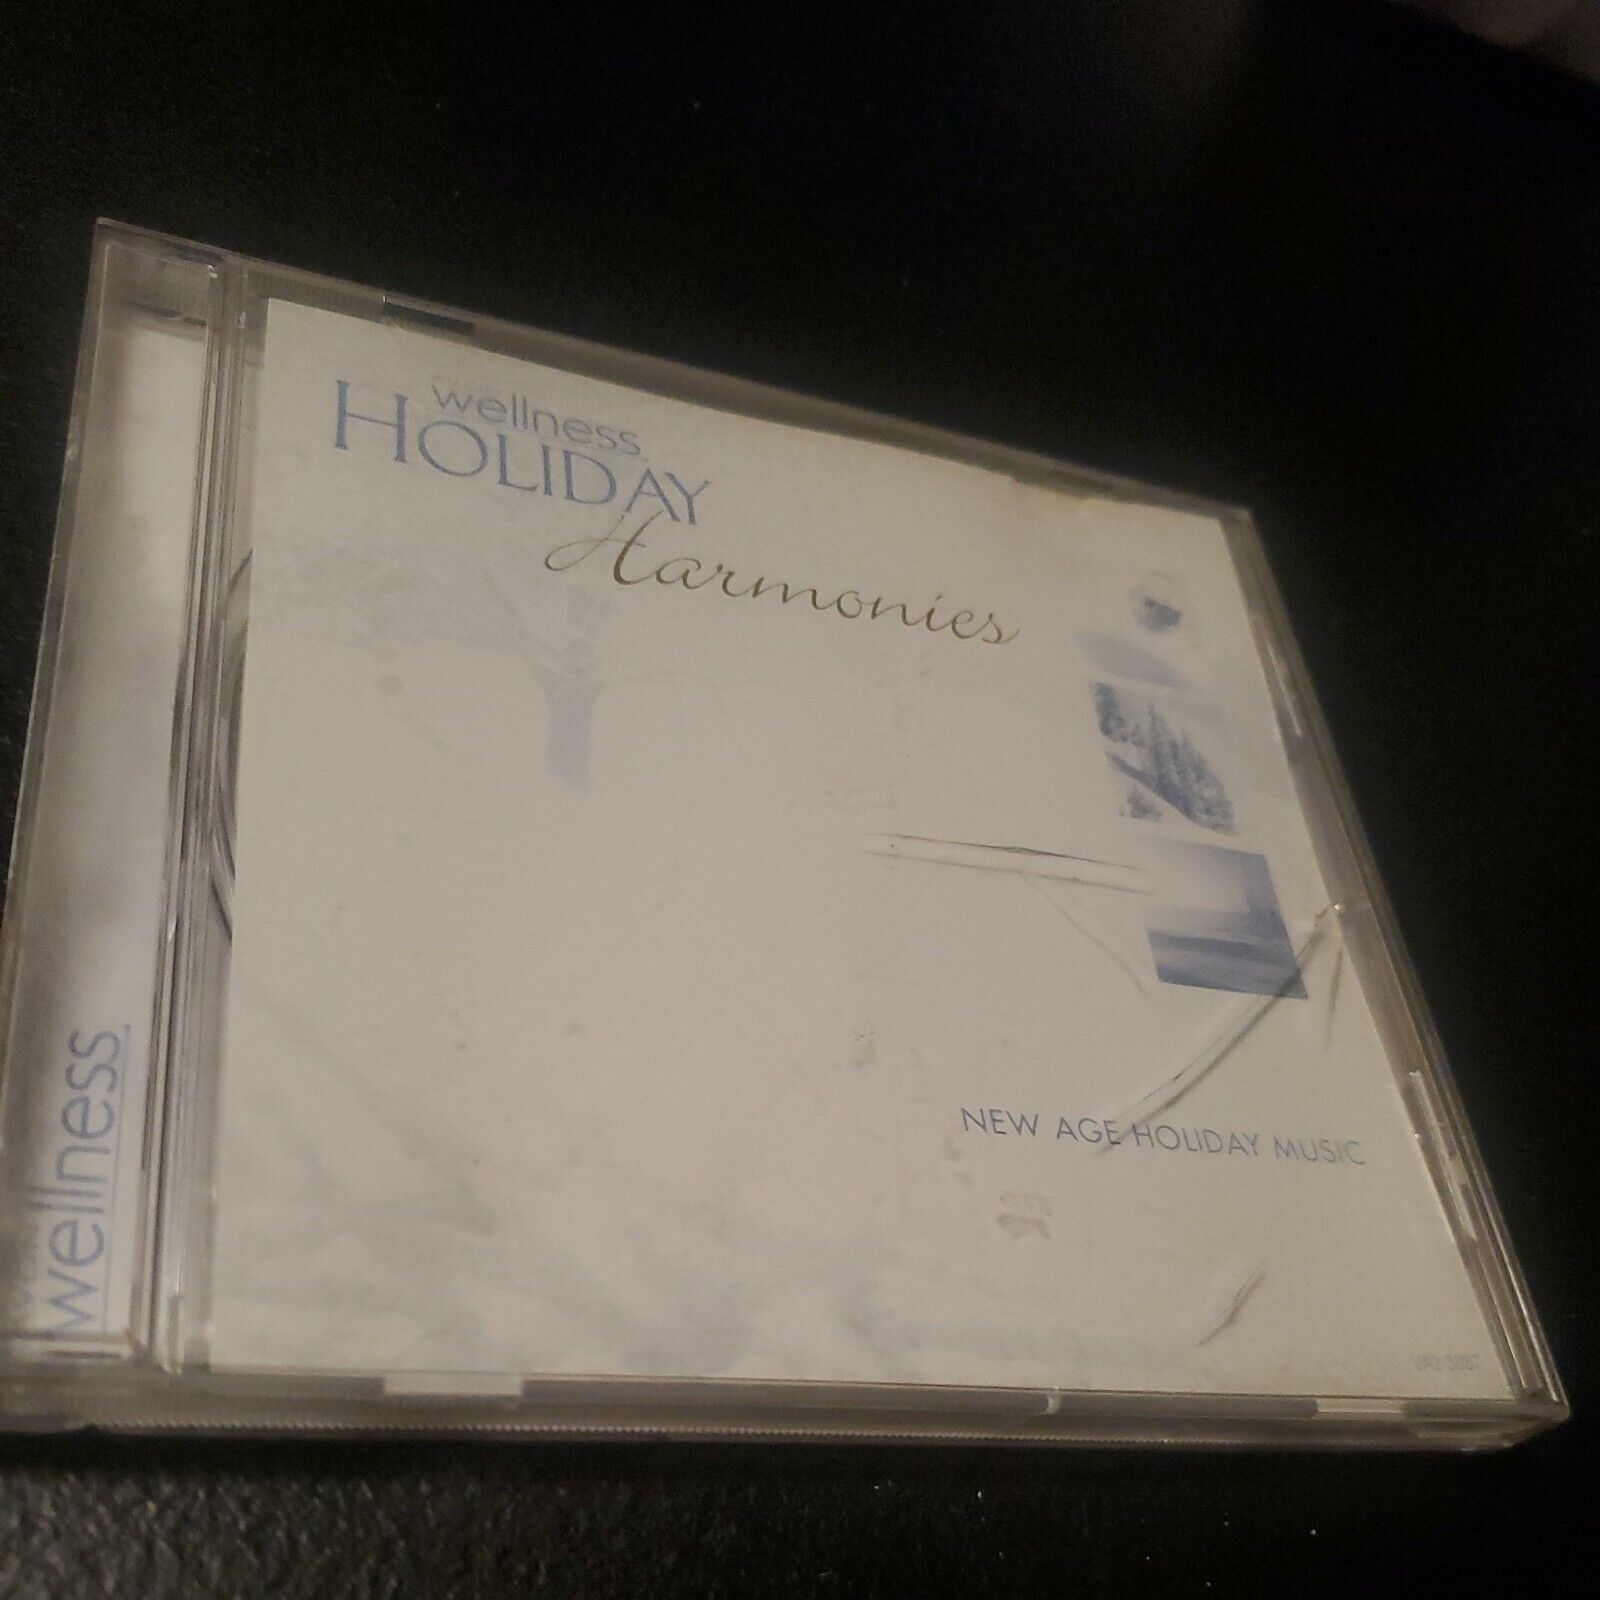 AVON WELLNESS Holiday Harmonies [CD] NEW AGE HOLIDAY MUSIC